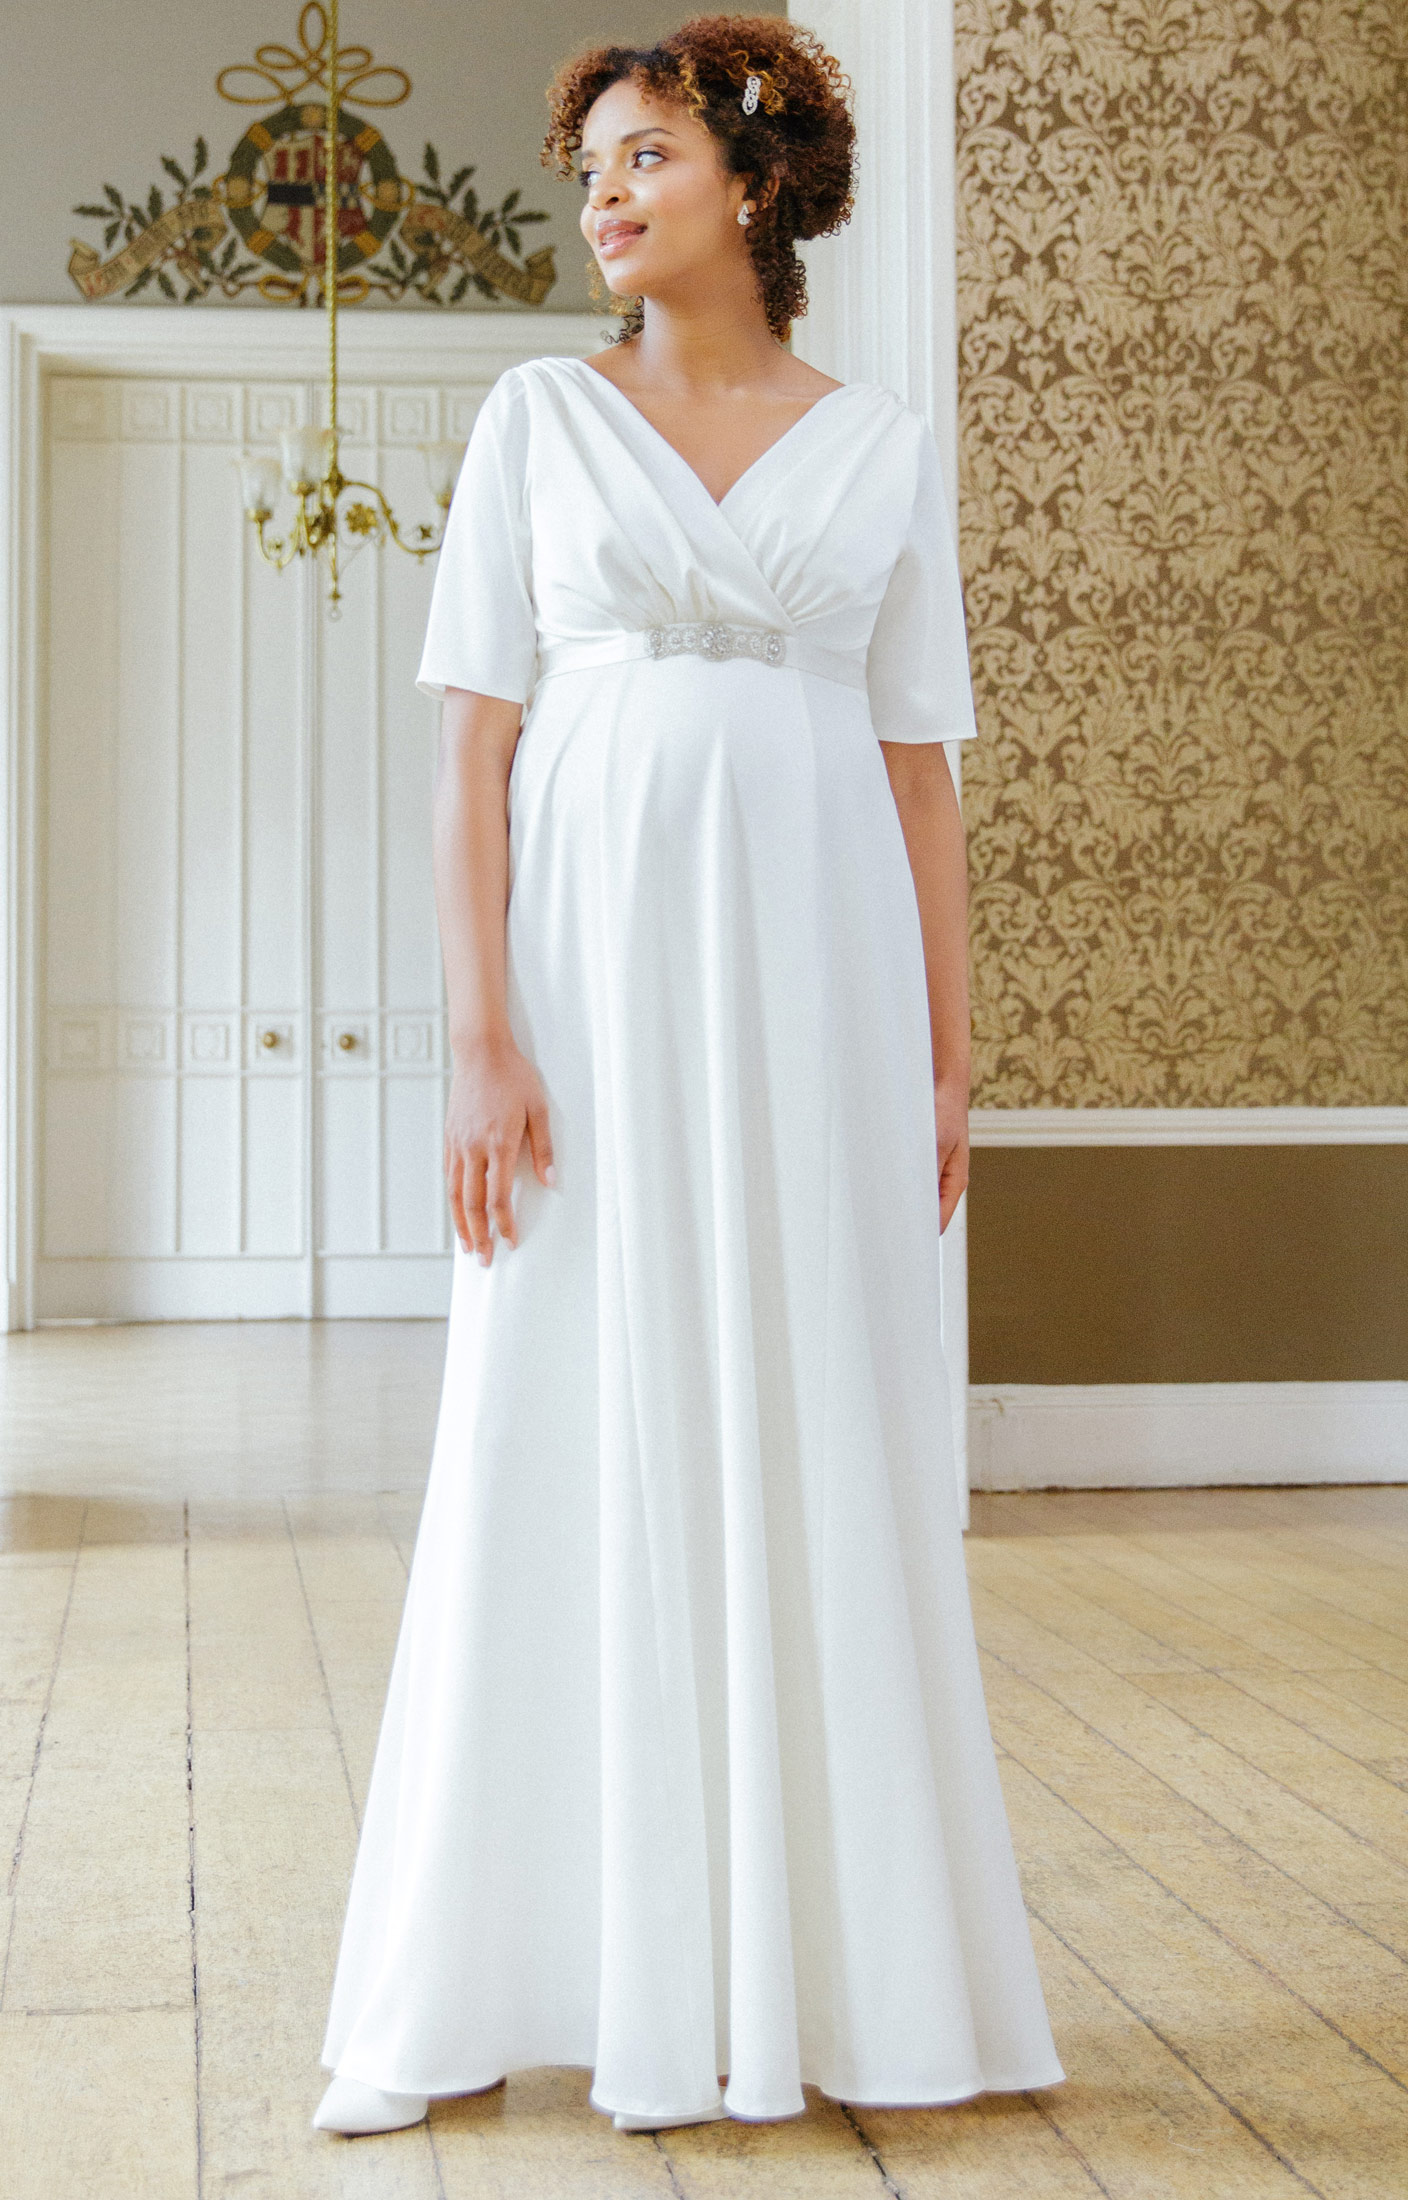 Simple Civil Wedding Dress For Pregnant | cvlogrus.com